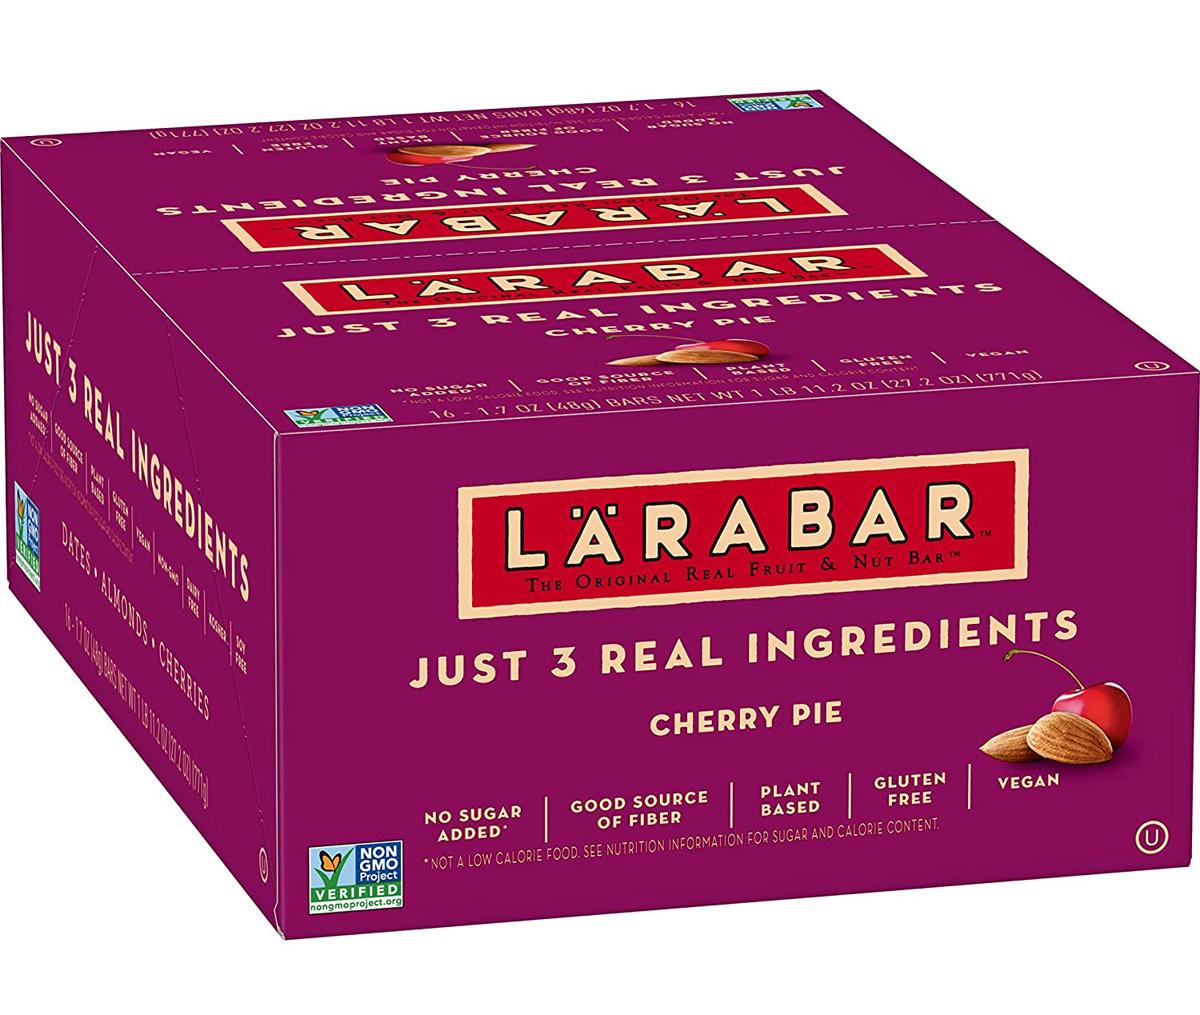 16 Larabar Cherry Pie Fruit and Nut Bars for $9.93 Shipped